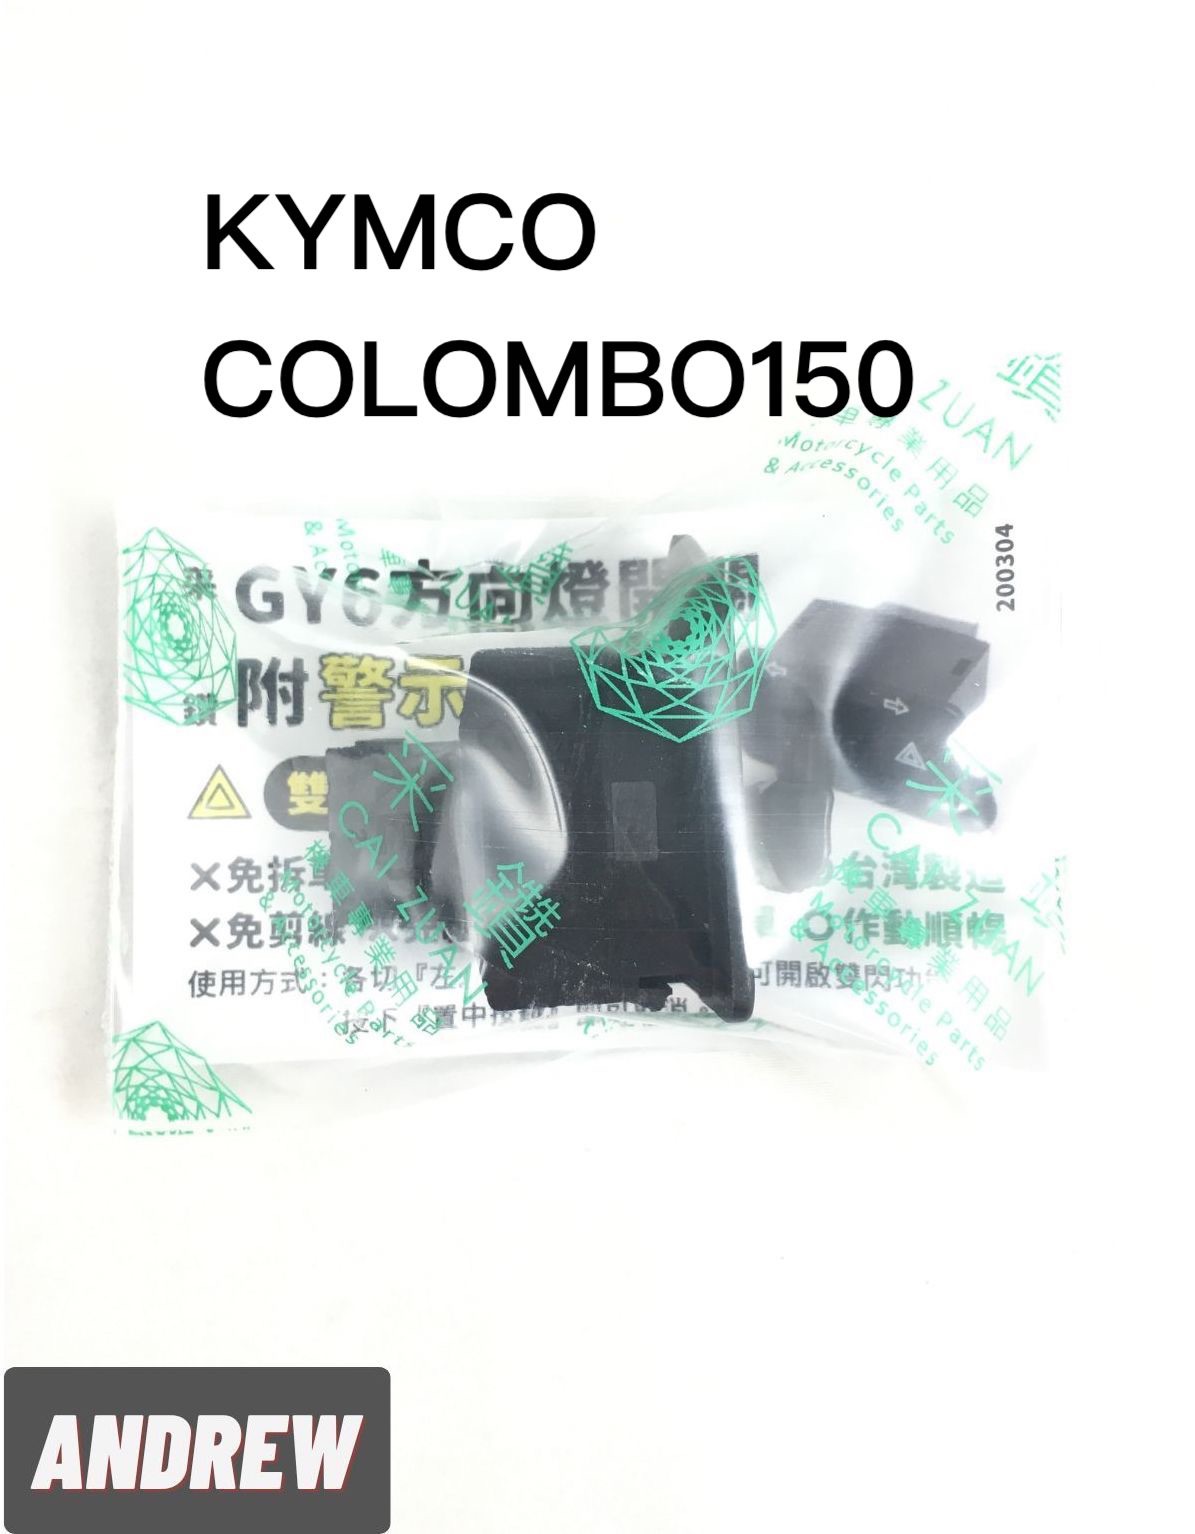 KYMCO COLOMBO150方向燈開關附警示燈功能 免線組 台中采鑽公司貨 ANDREW 安德魯